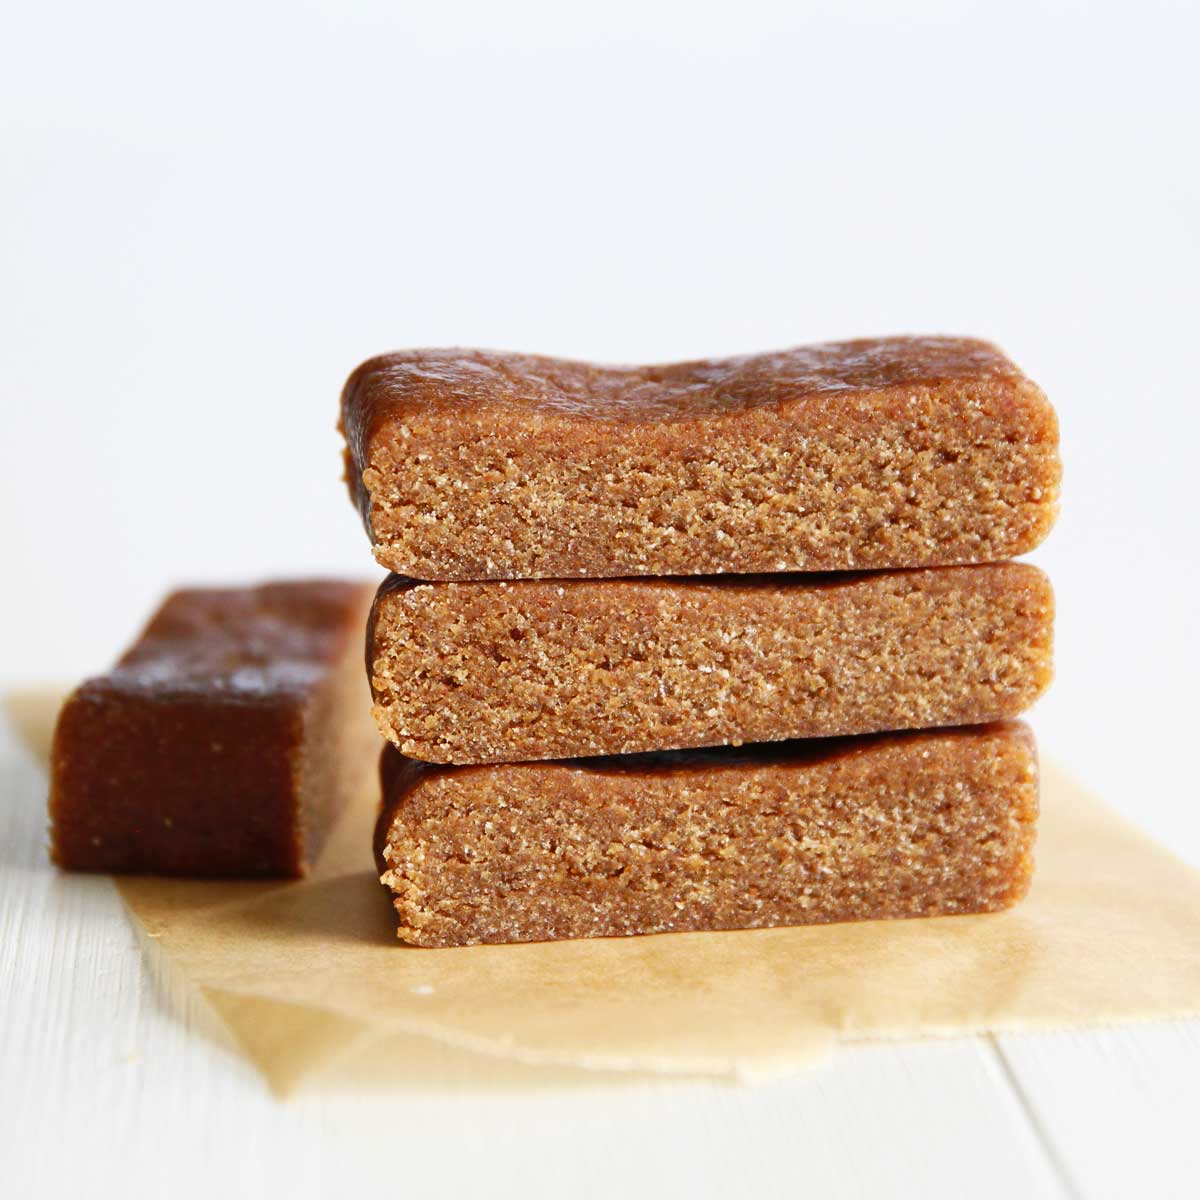 Gingerbread Collagen Protein Bars: a Healthier Festive Snack - Caramel Apple Dip